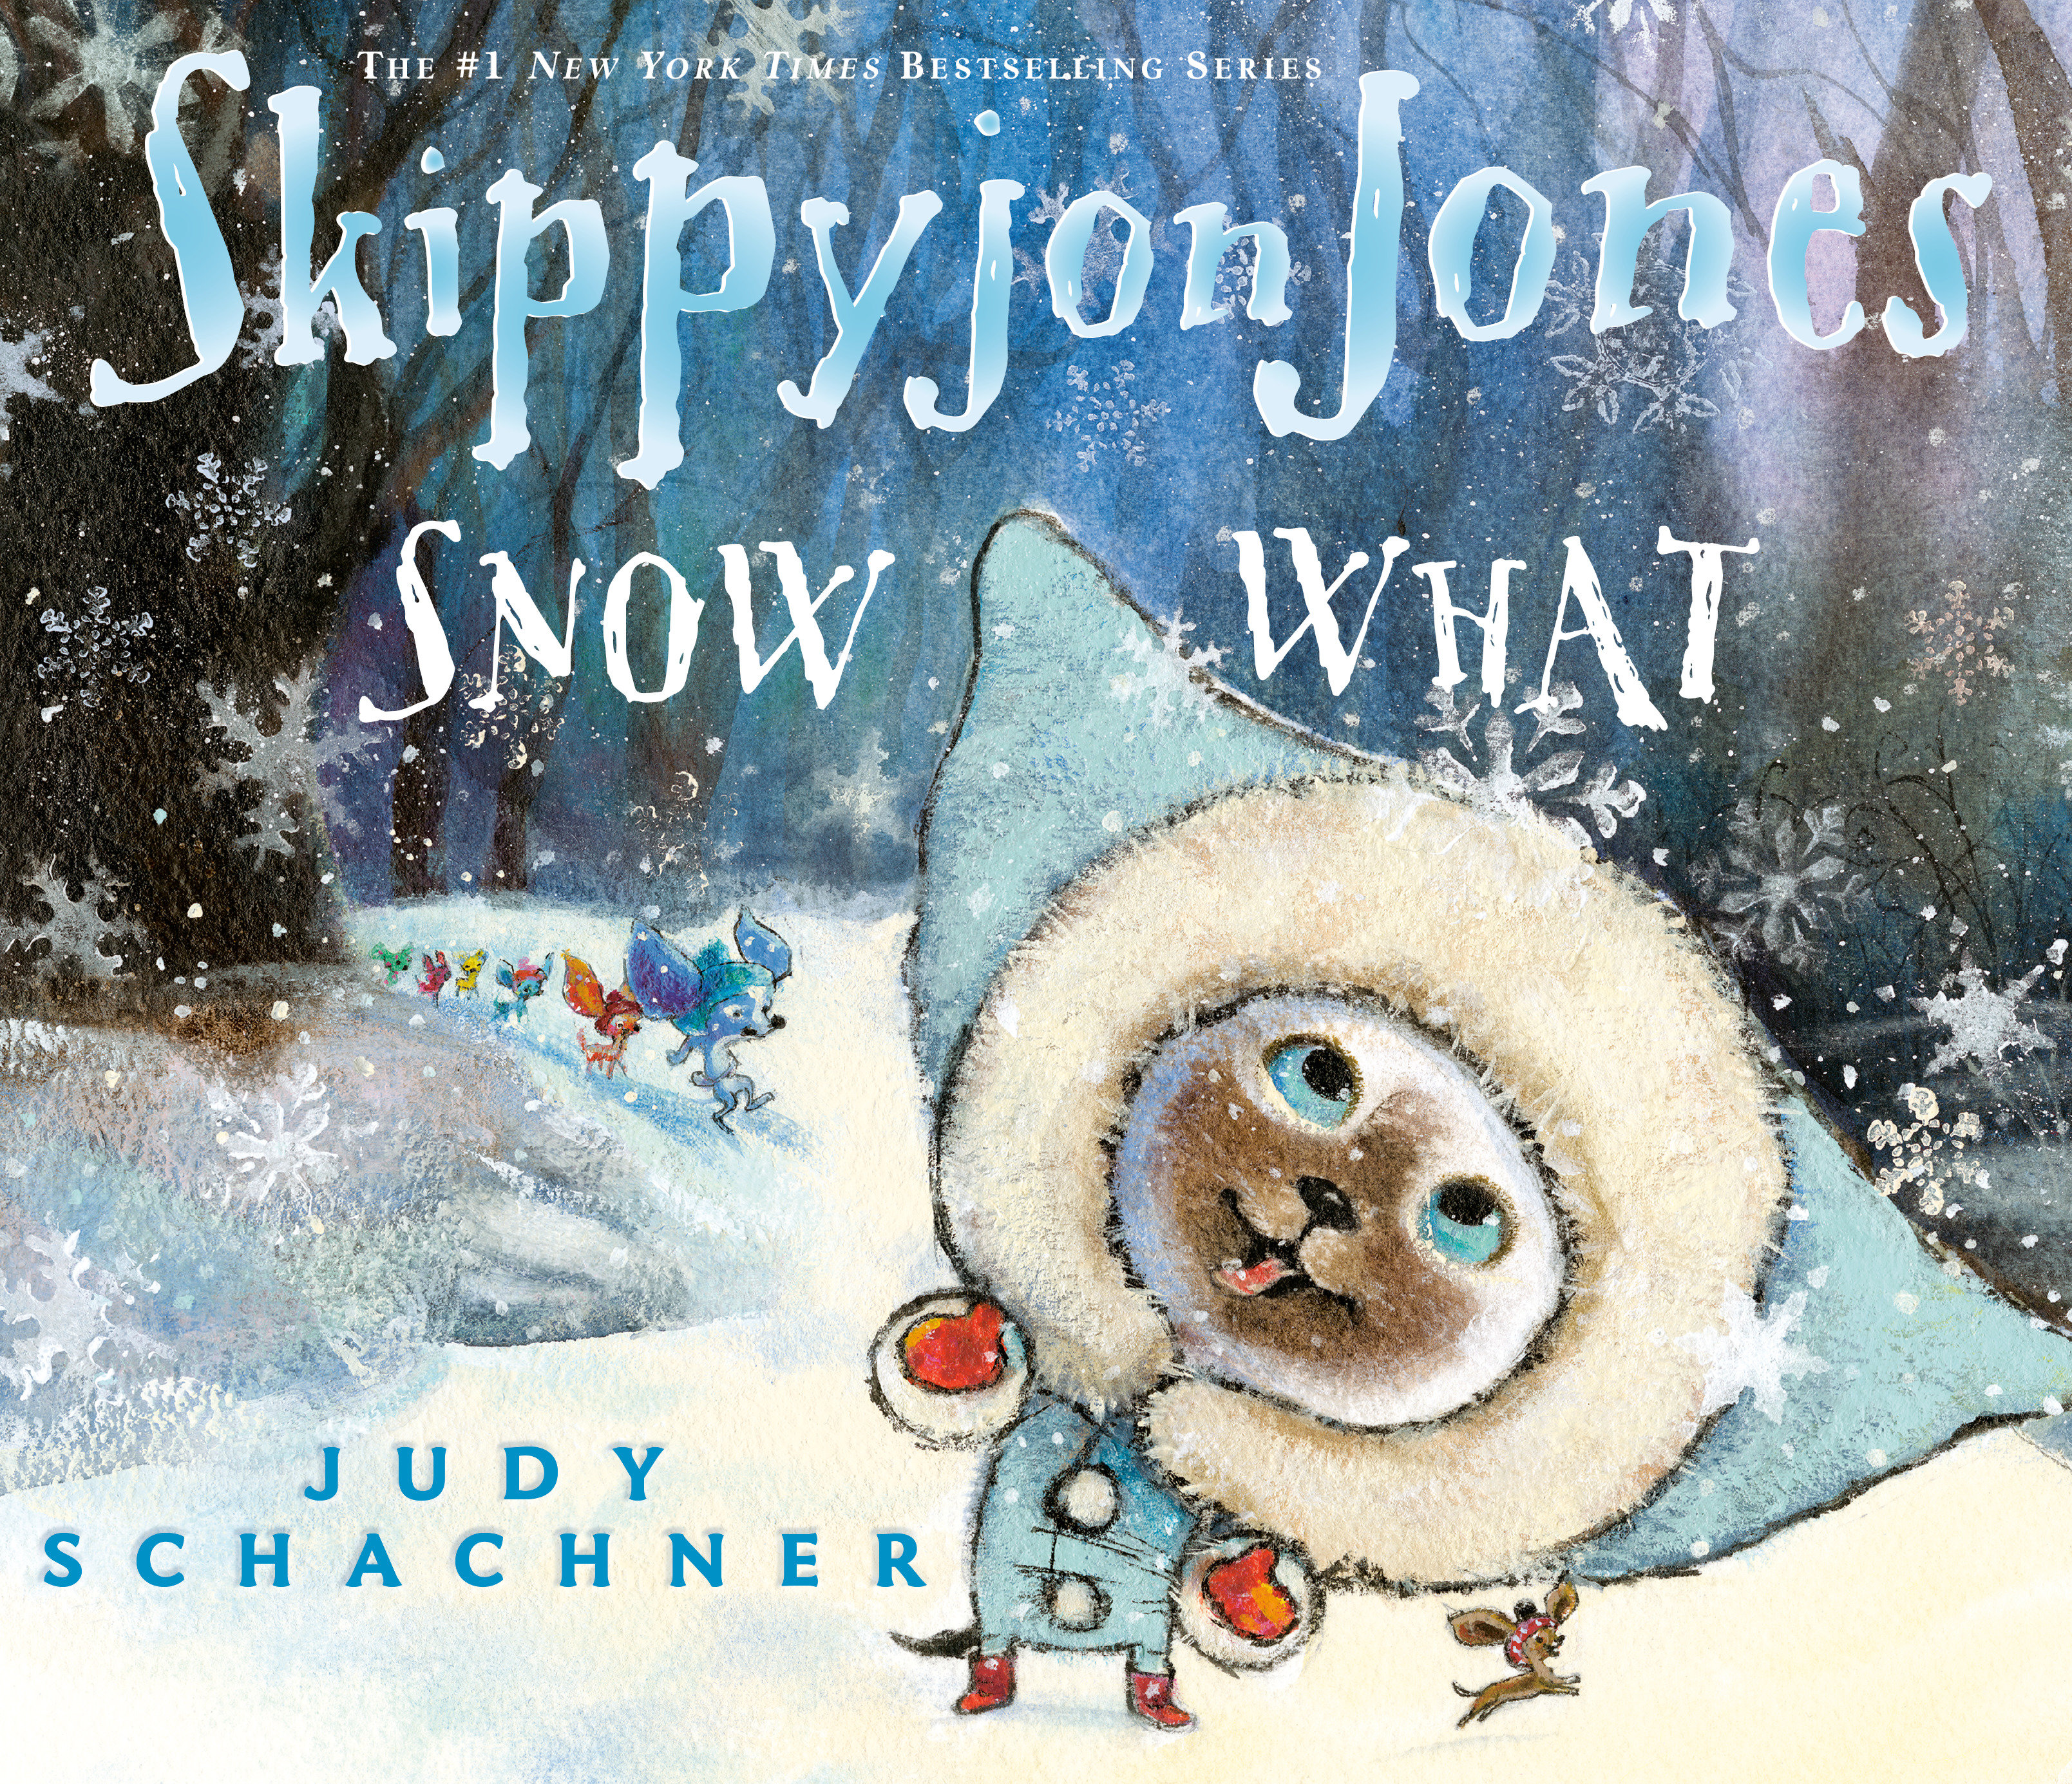 Skippyjon Jones Snow What (Hardcover Book)